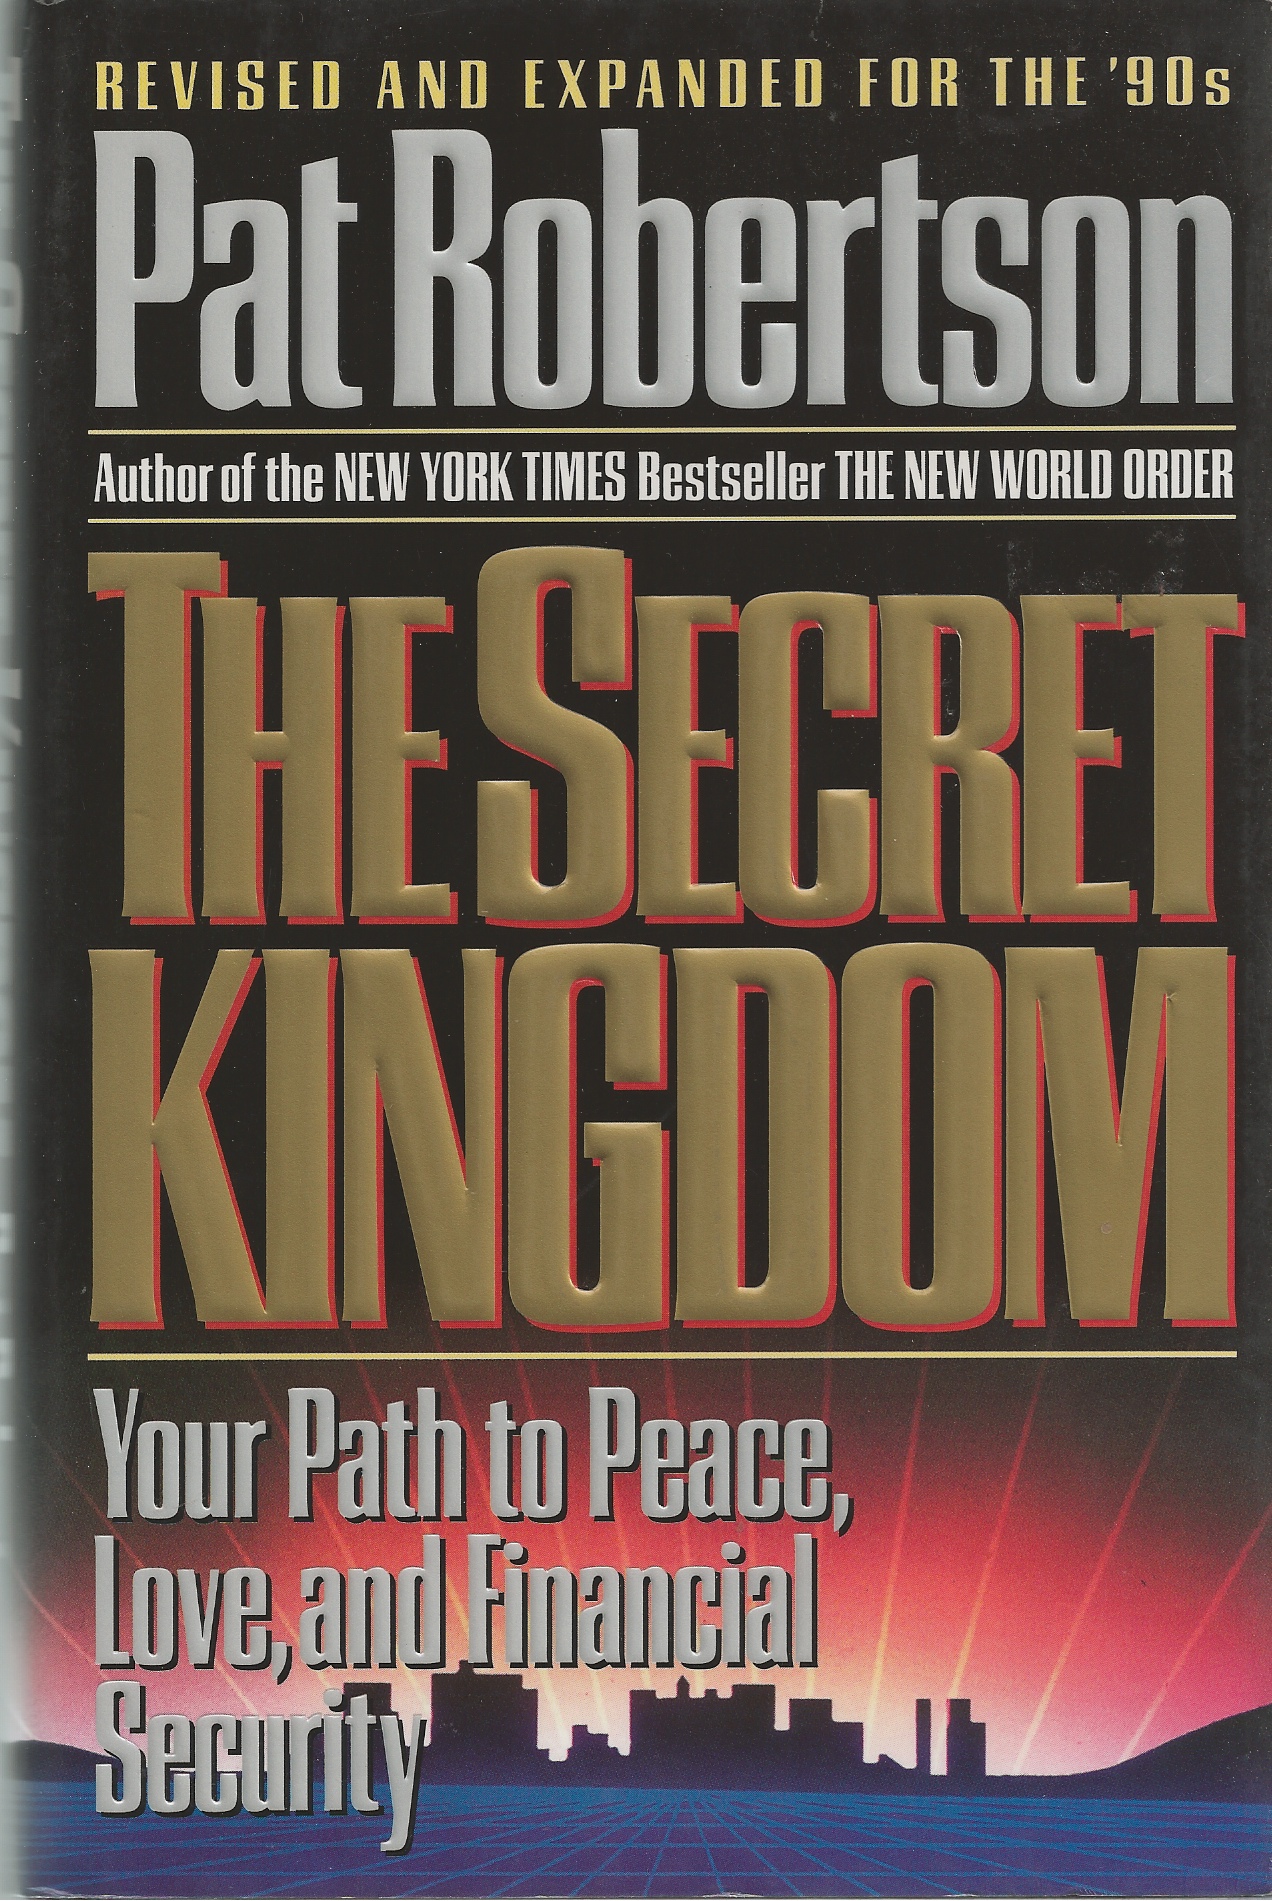 ROBERTSON PAT - Secret Kingdom, the